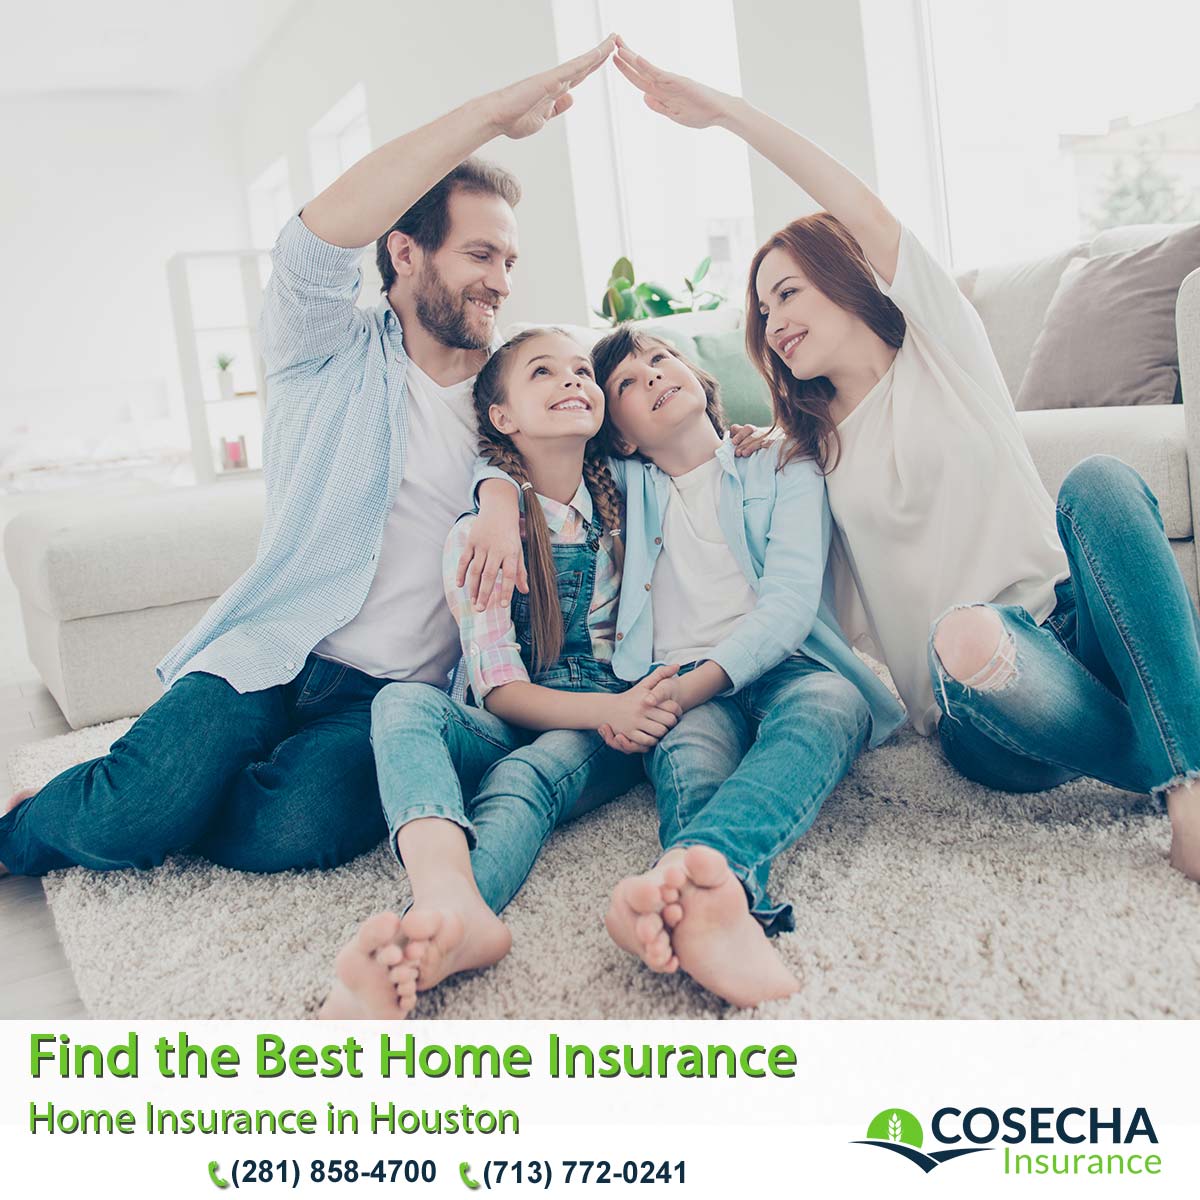 03 Home Insurance in Houston